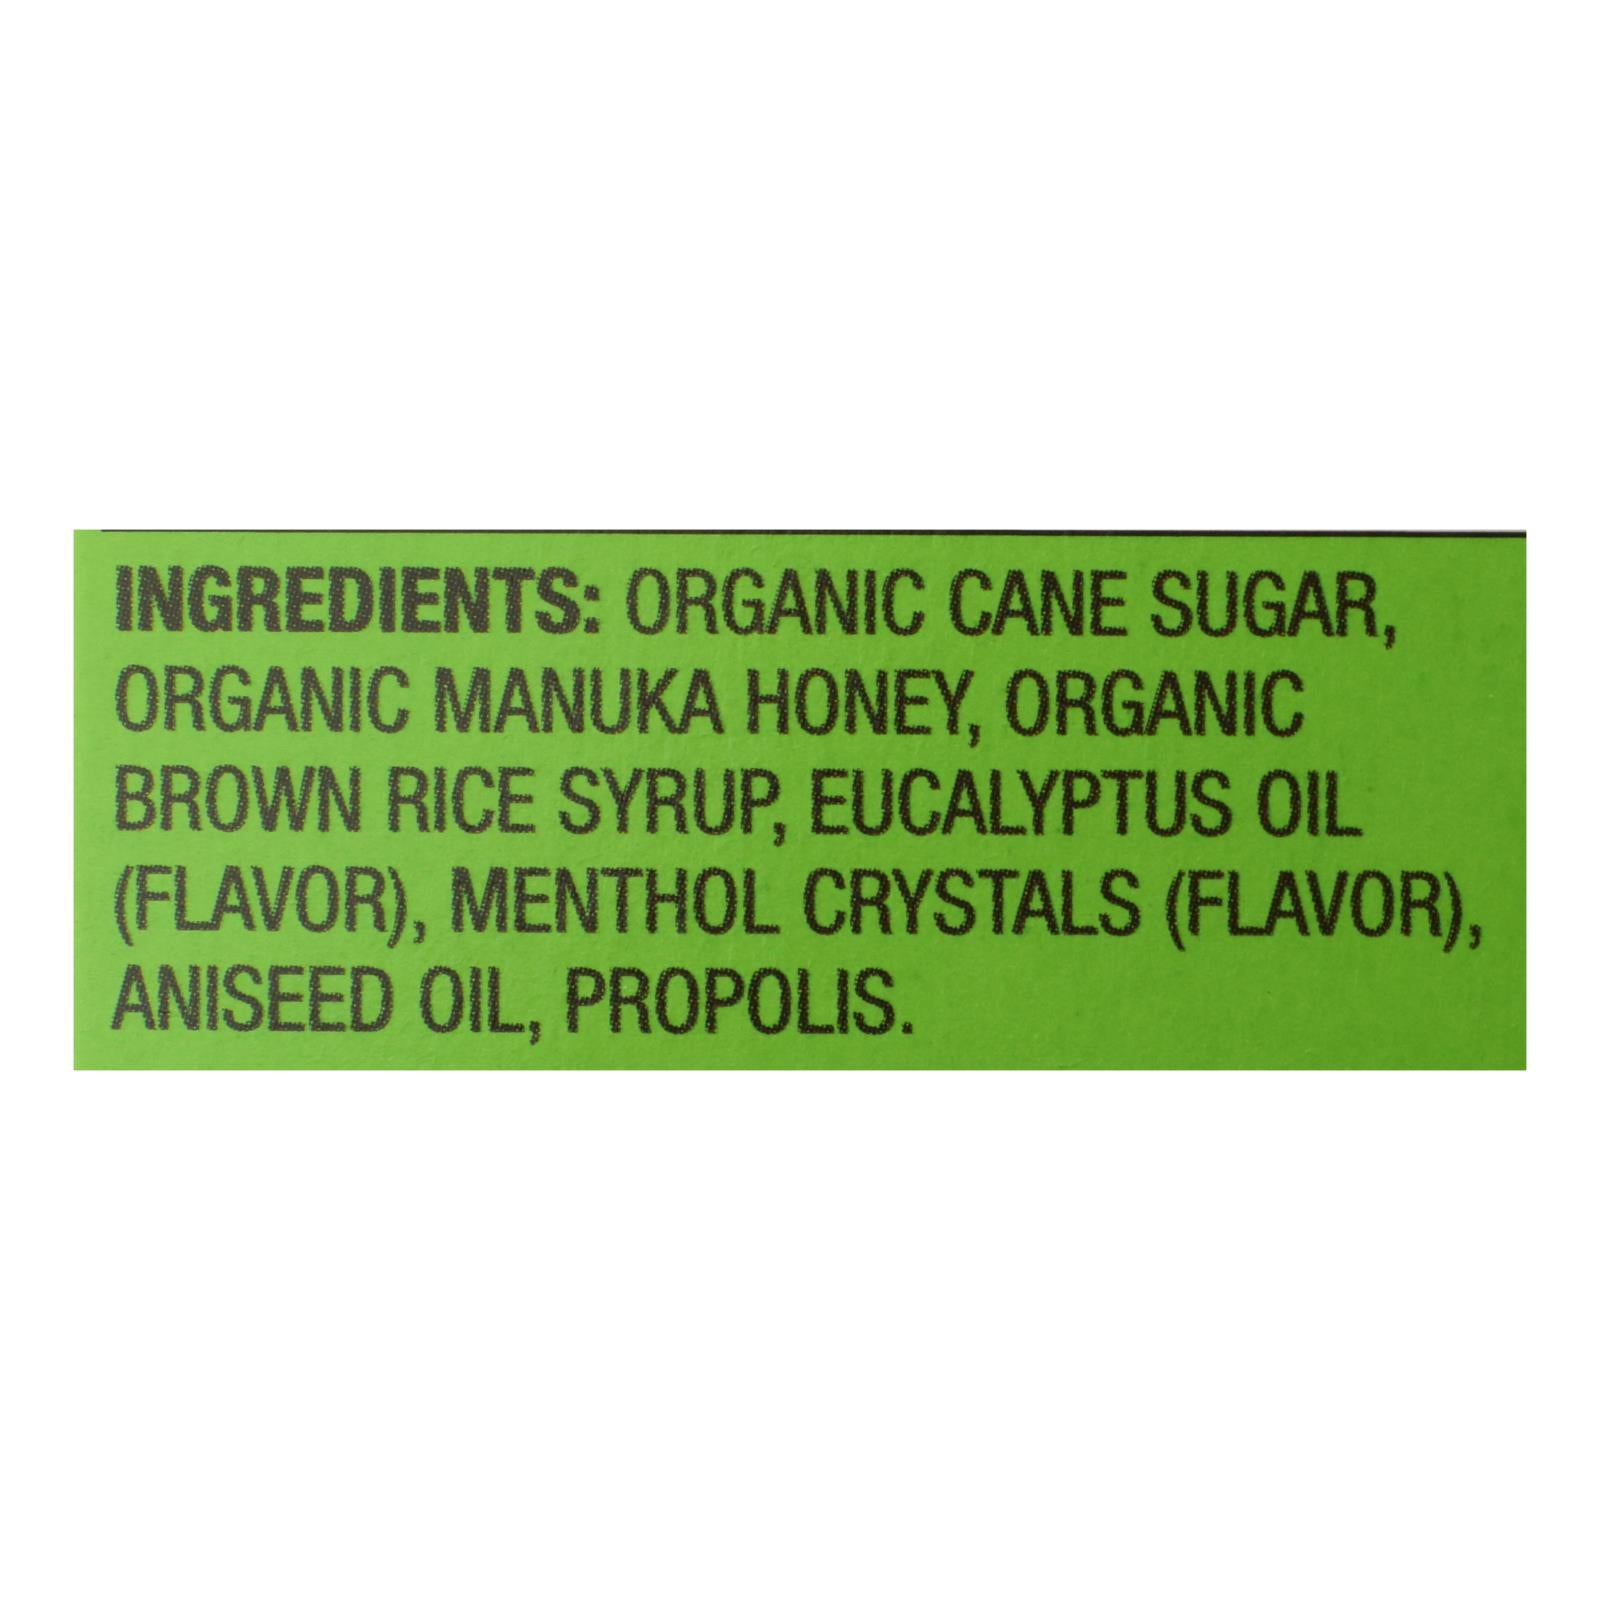 Wedderspoon Drops - Organic - Manuka Honey - Eucalyptus - 4 Oz